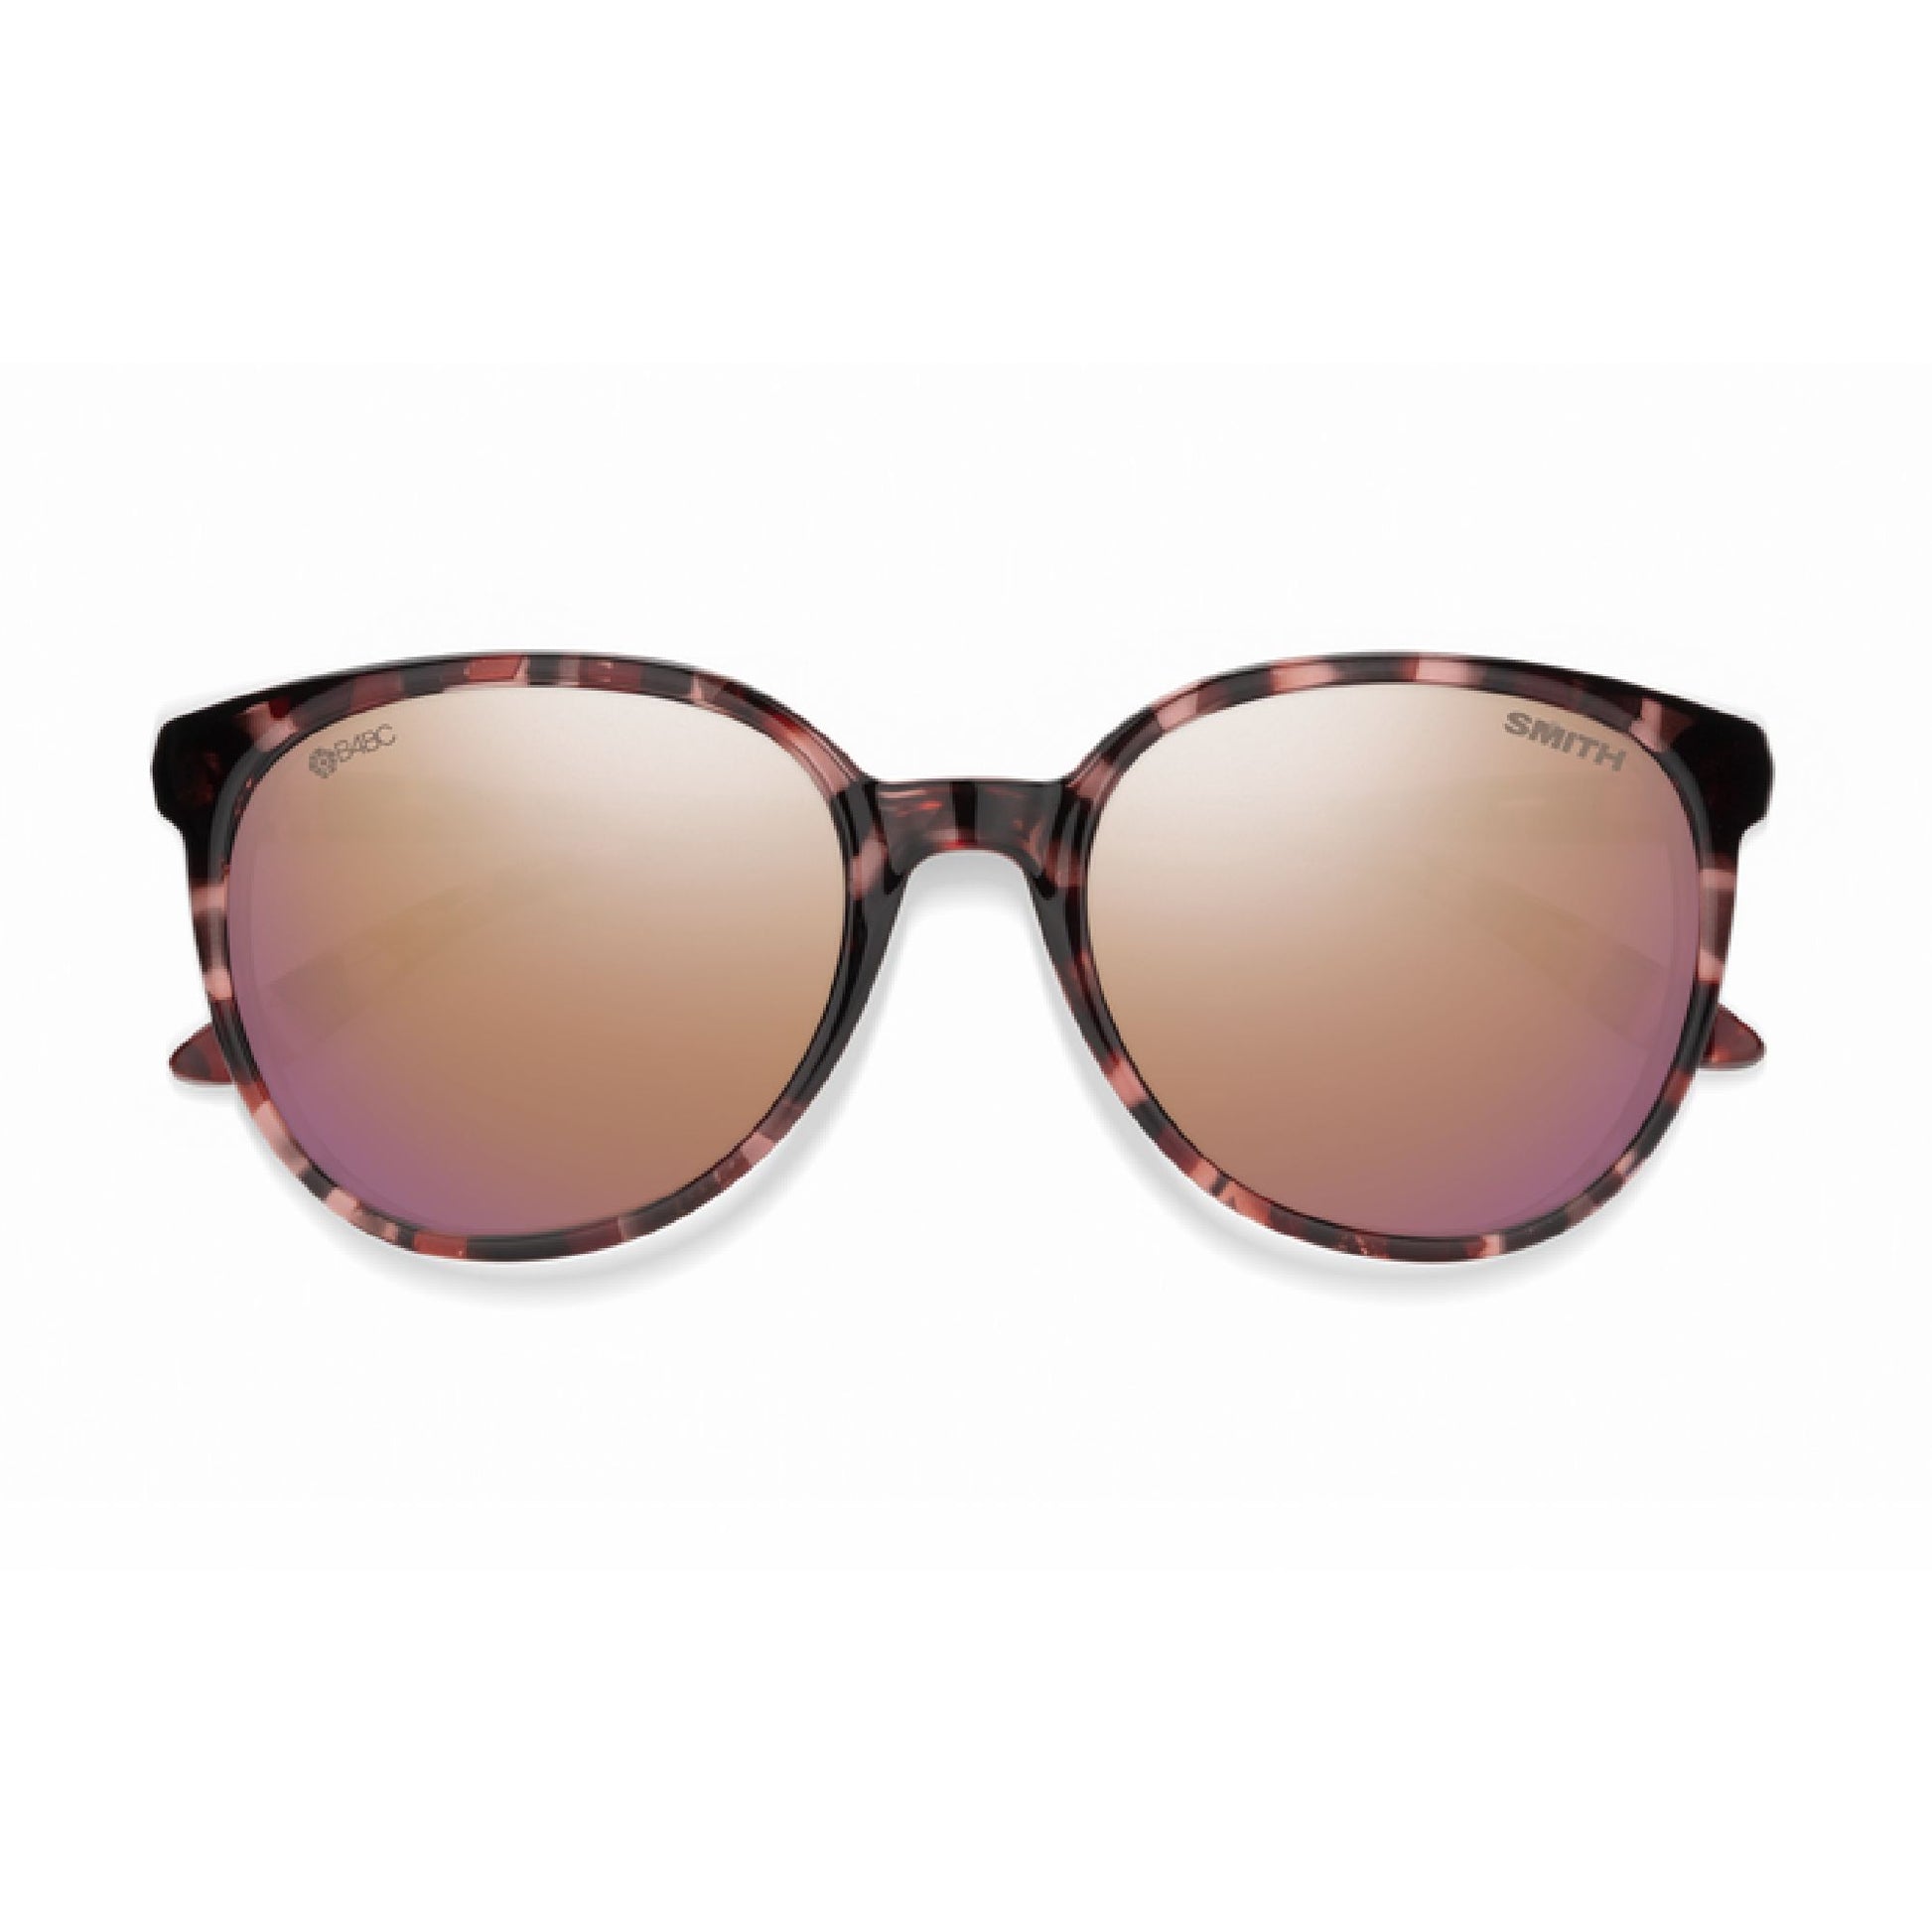 Smith Cheetah Sunglasses B4BC Rose Tortoise ChromaPop Polarized Rose Gold Lens Sunglasses